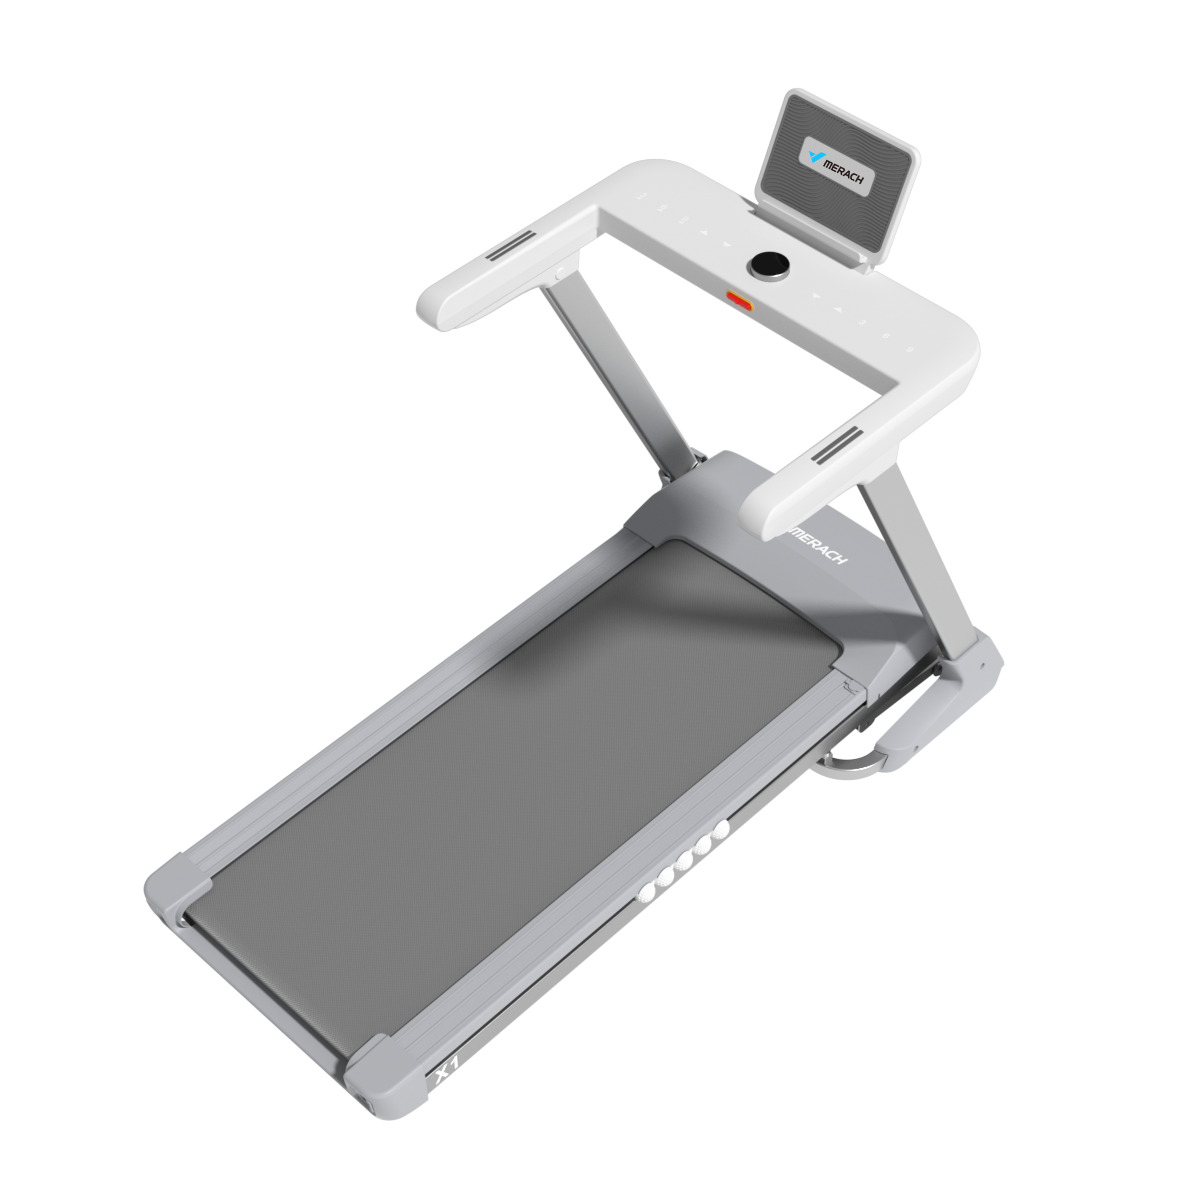 x1 treadmill no screen